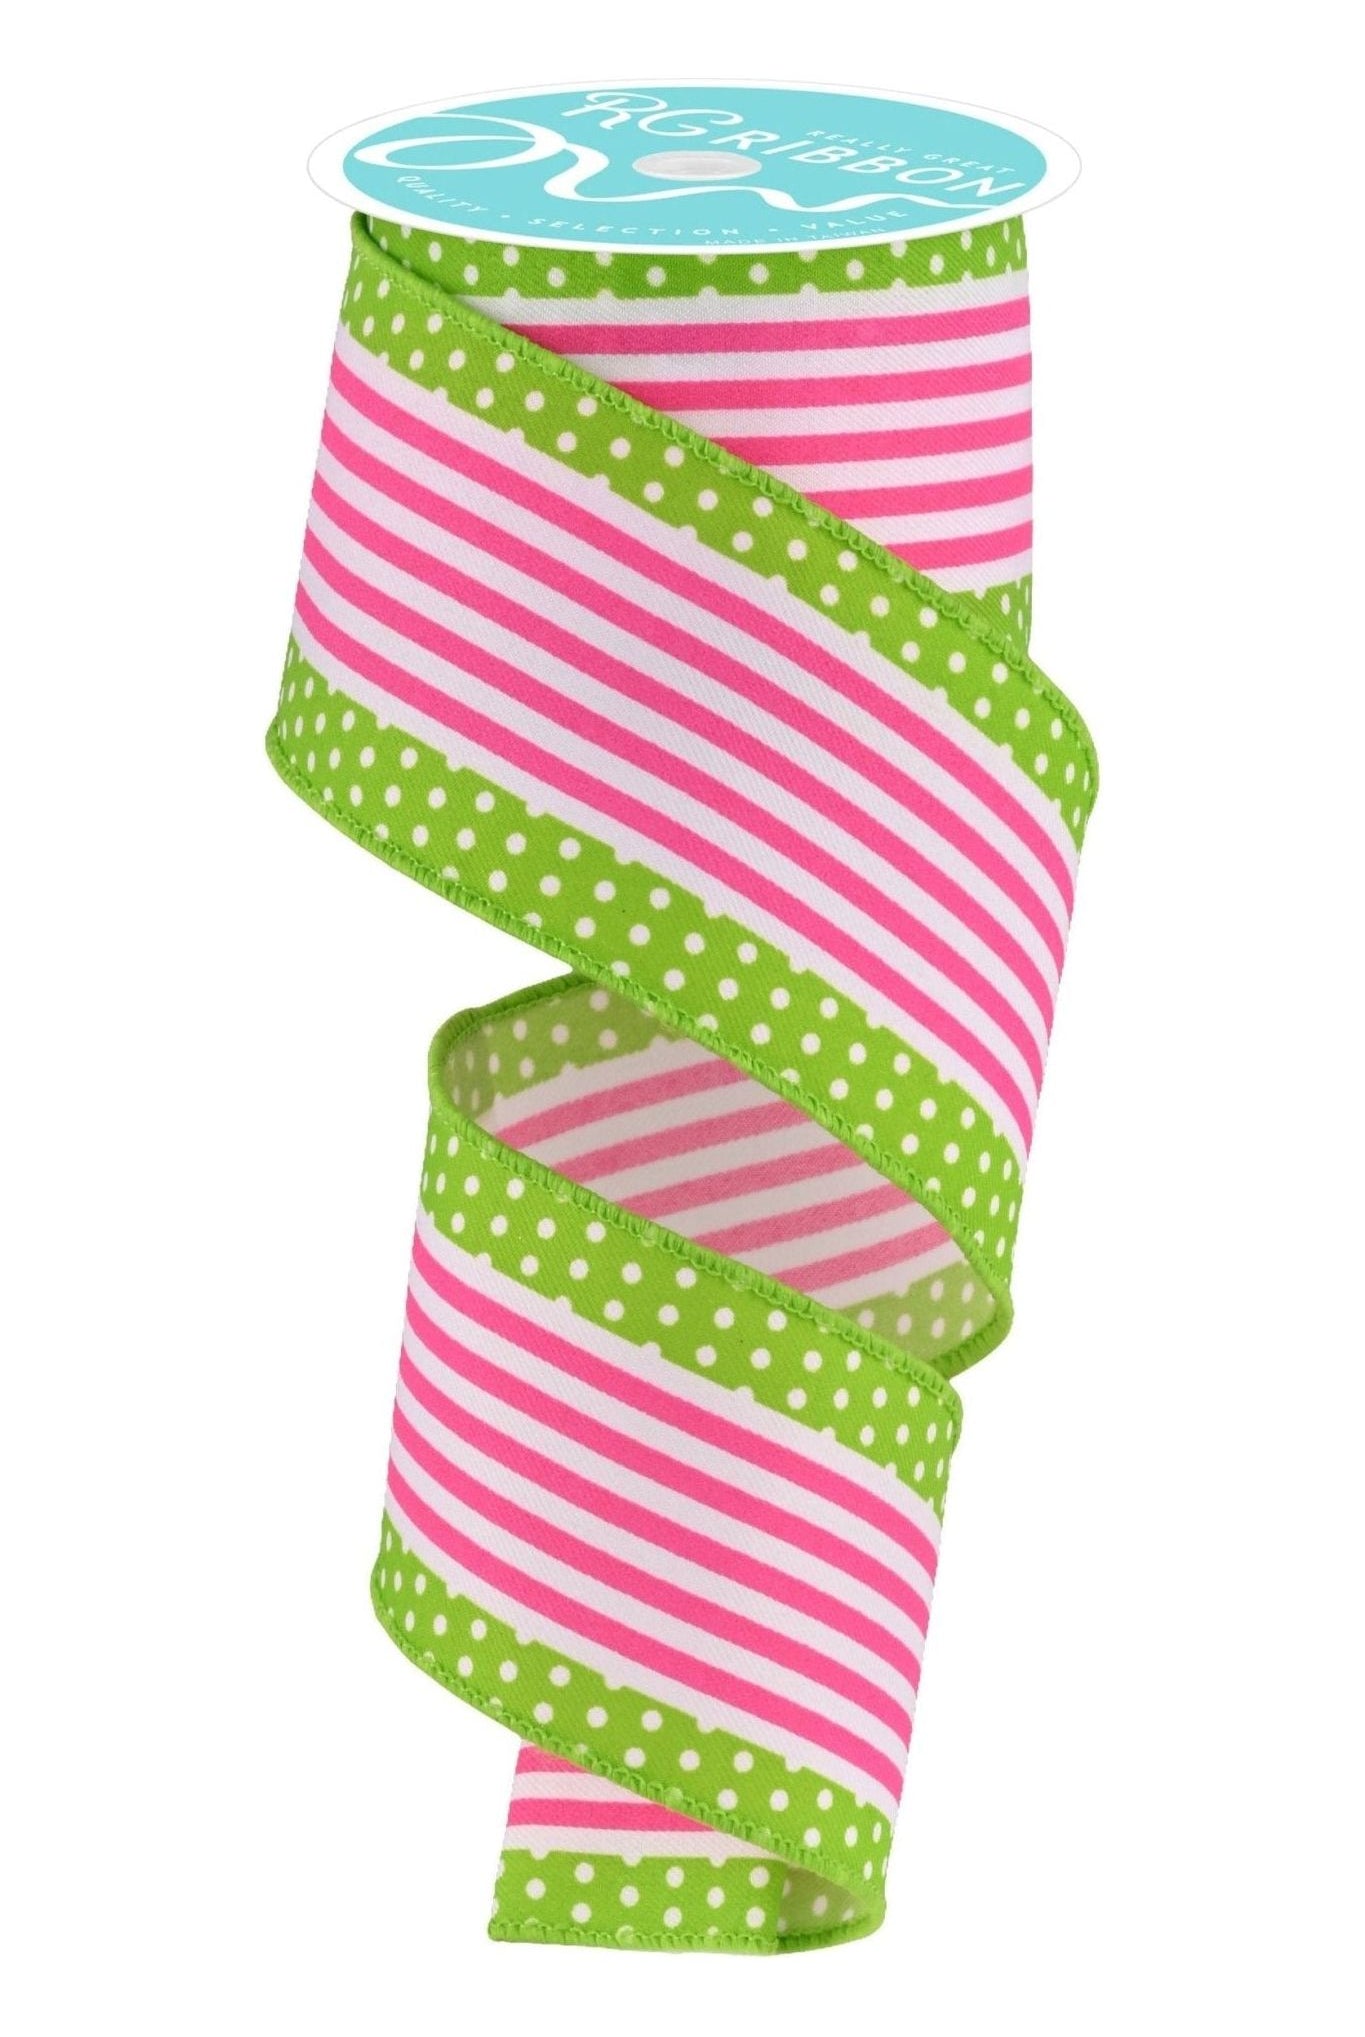 Shop For 2.5" Vertical Stripe Polka Dot Edge Ribbon: Hot Pink/Lime (10 Yards) RGF1301AW